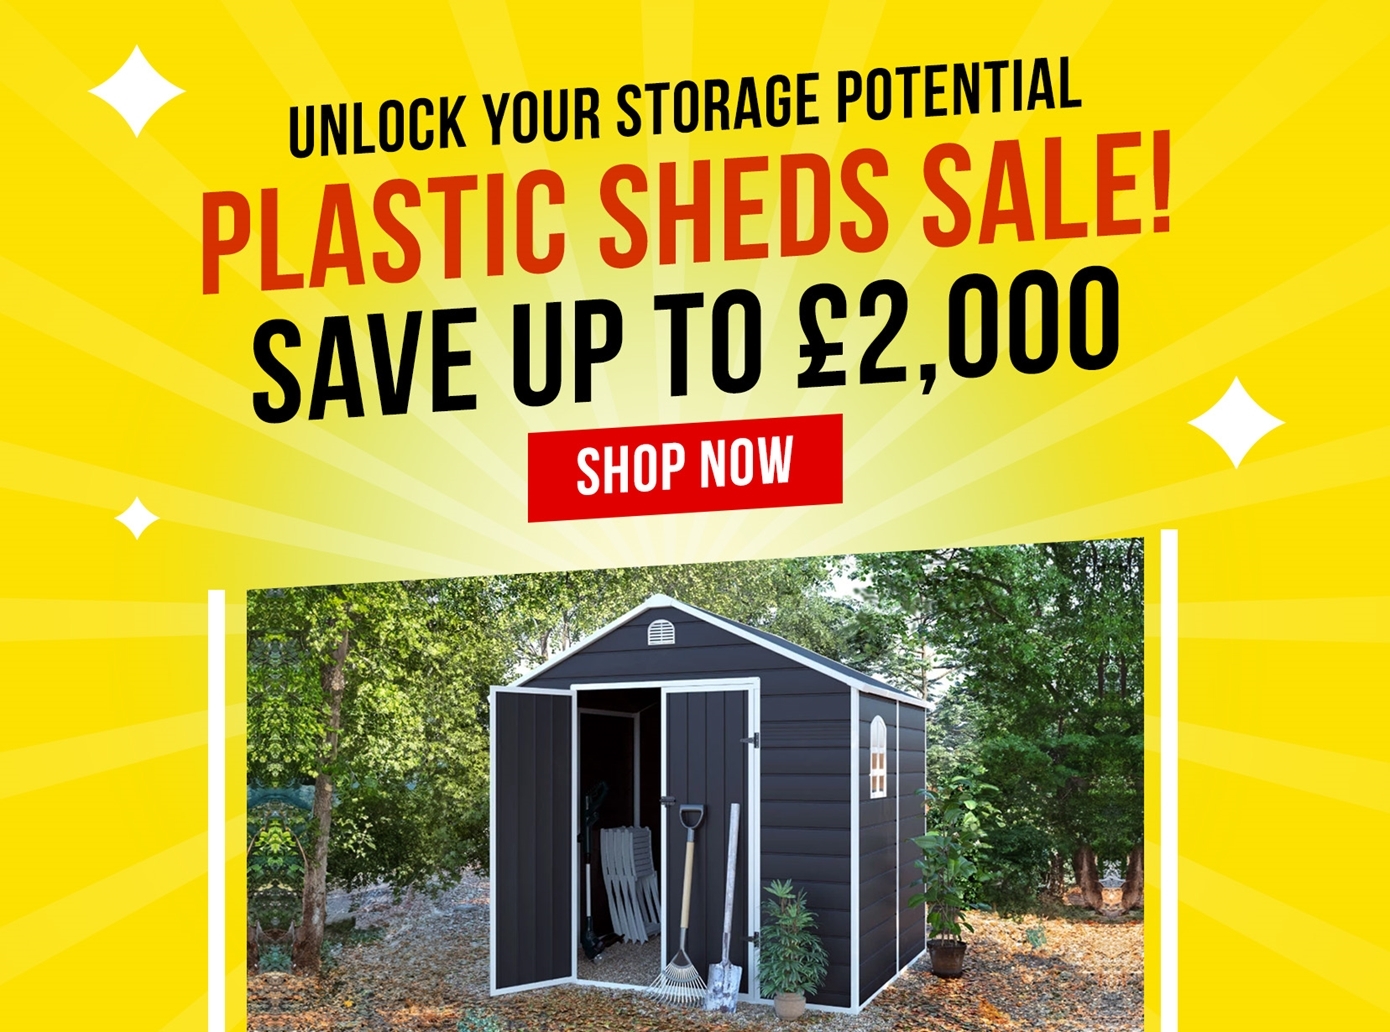 Plastic sheds sale